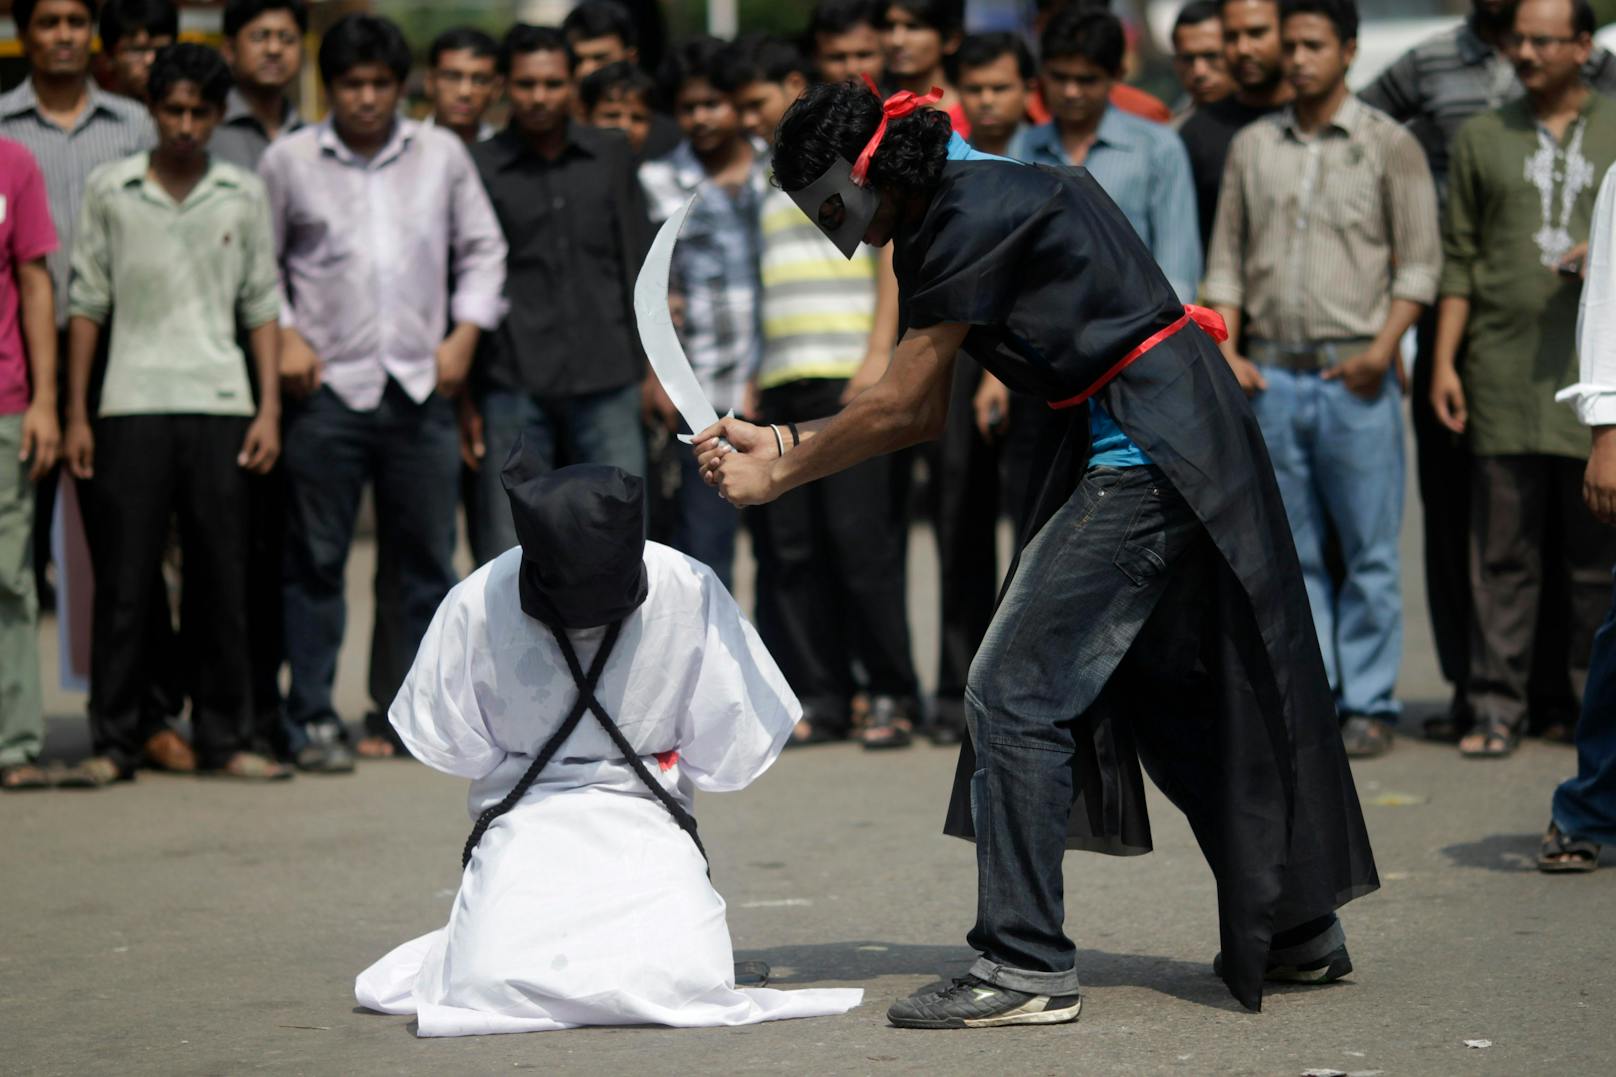 Saudi-Arabien richtet 17 Menschen mit dem Schwert hin